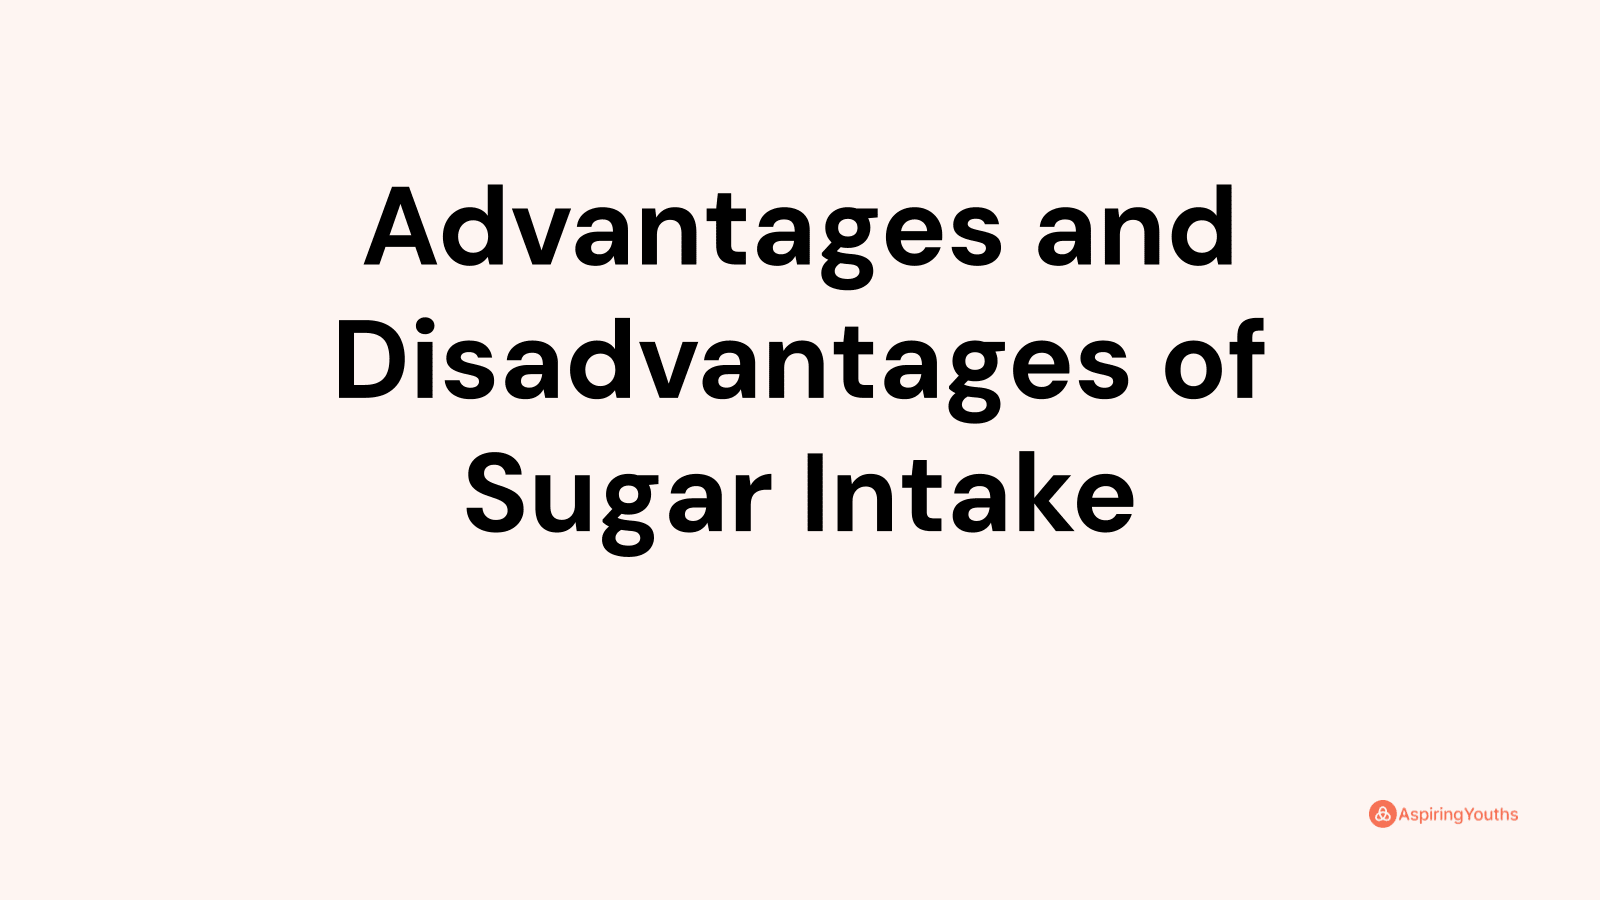 Advantages and disadvantages of Sugar Intake